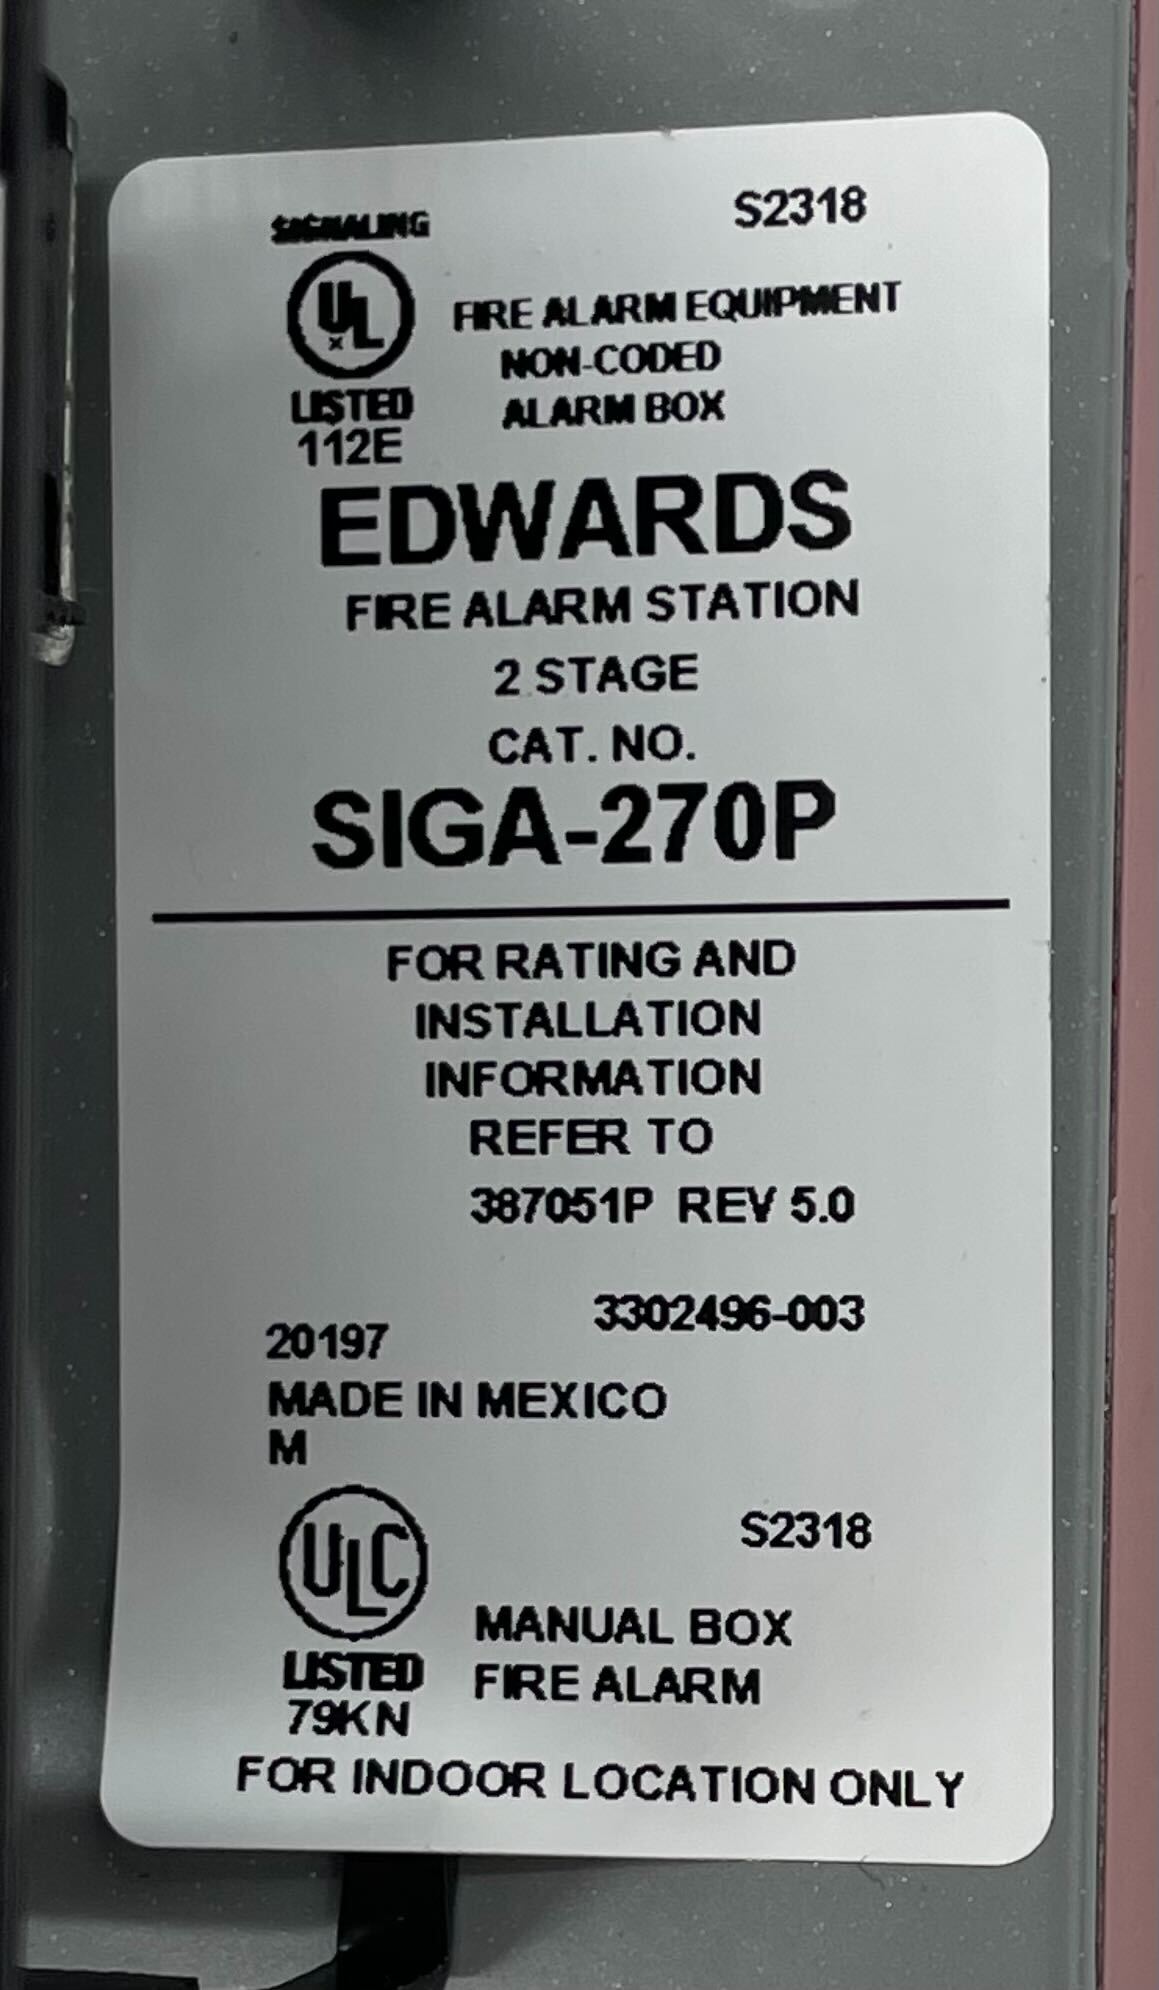 Edwards SIGA-270P - The Fire Alarm Supplier